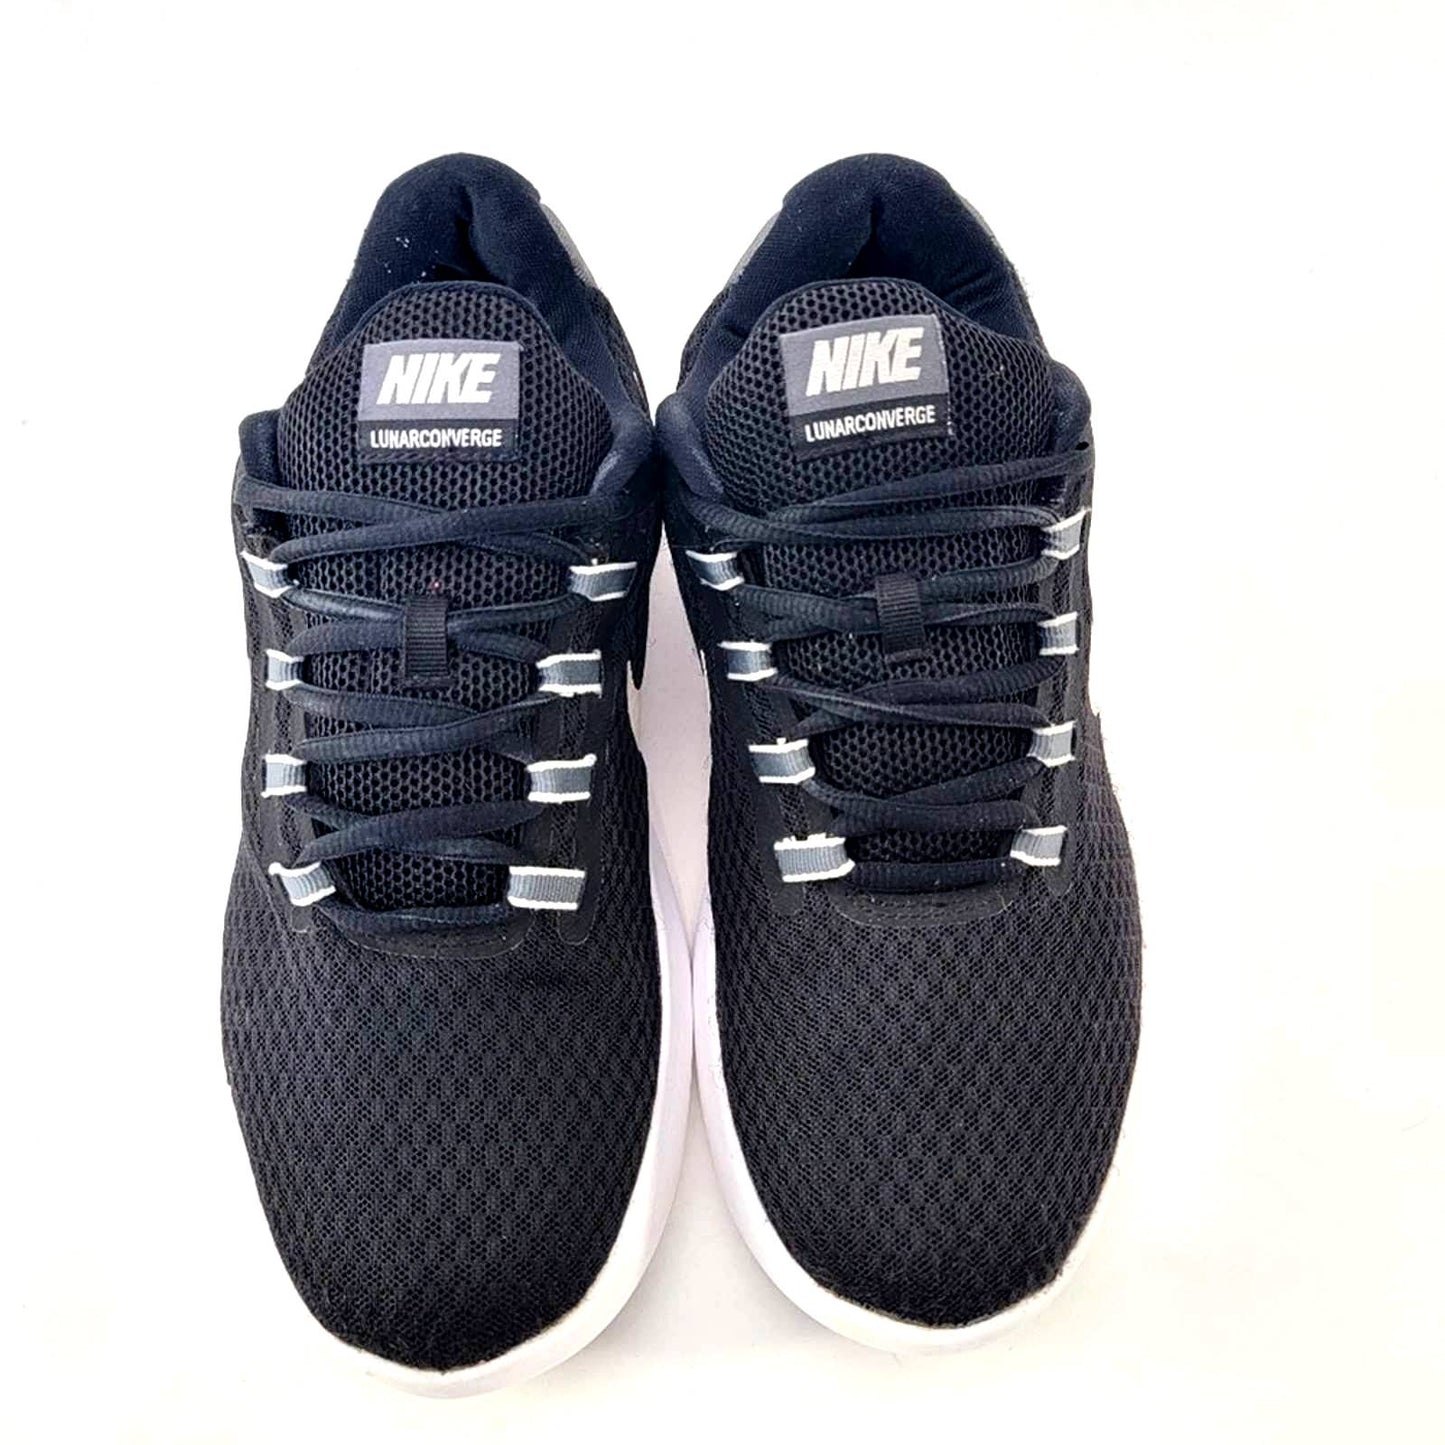 Nike Lunar Converge Running Shoes - 9.5/11